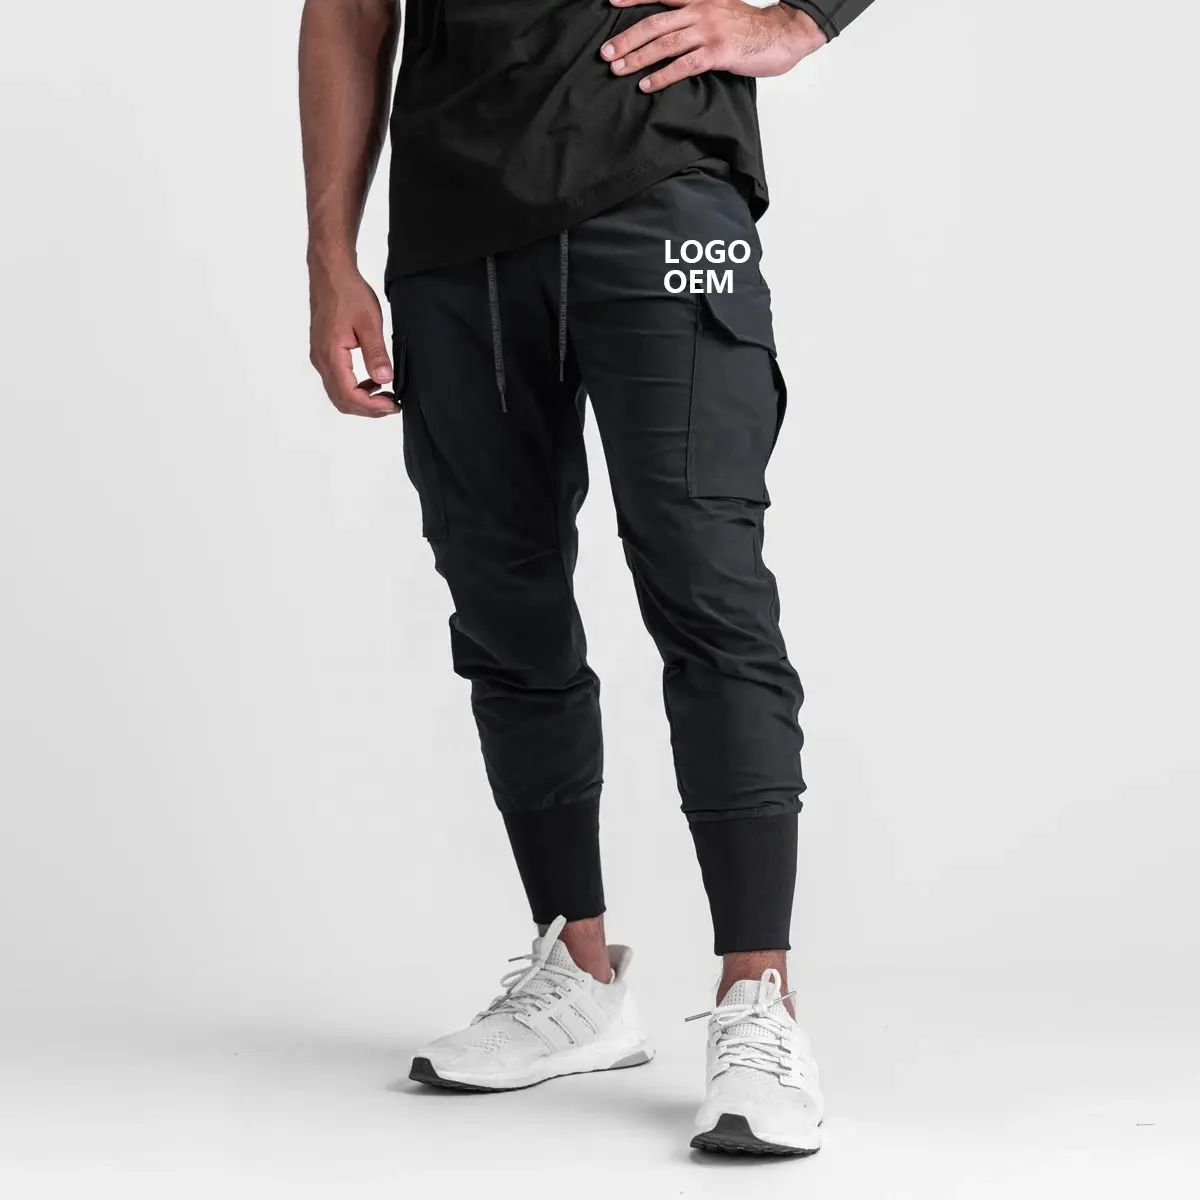 High Quality Nylon Slim Fitness Workout Track Pants Man Wholesale Blank Compression Gym Bottoms Black Jogger Sweat Pants